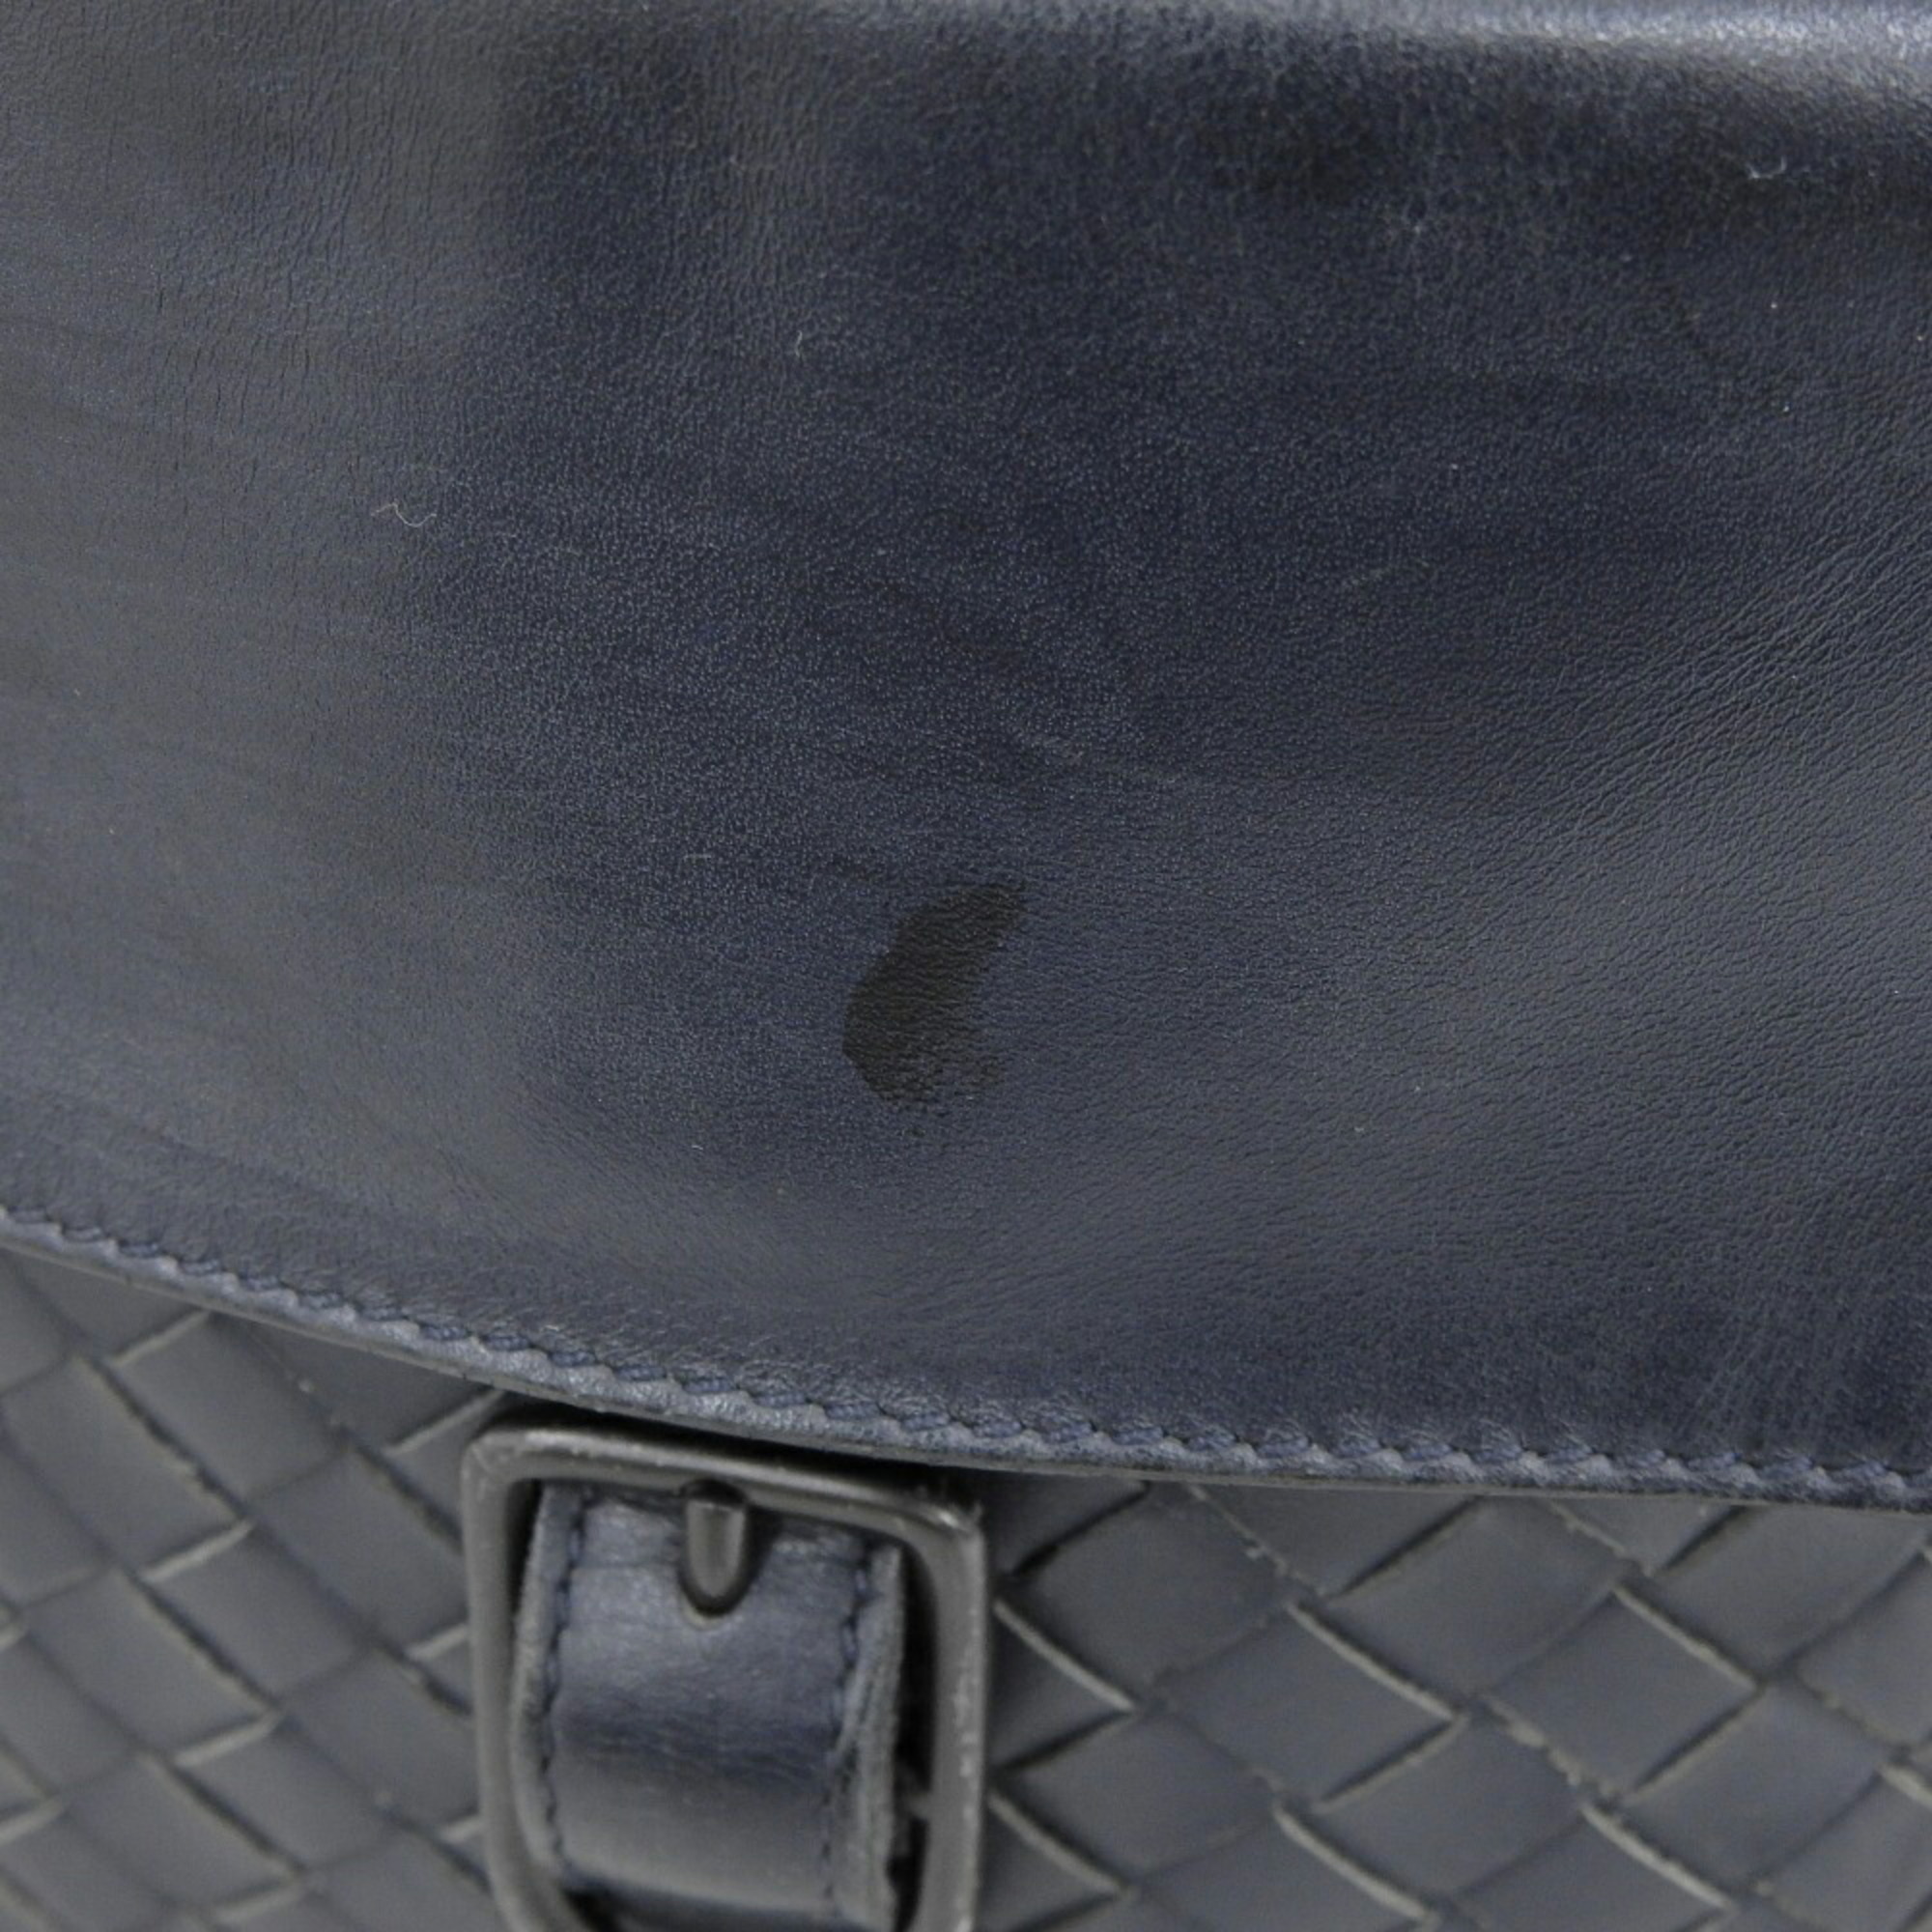 Bottega Veneta BOTTEGA VENETA Intrecciato Shoulder Bag Leather Navy 113092